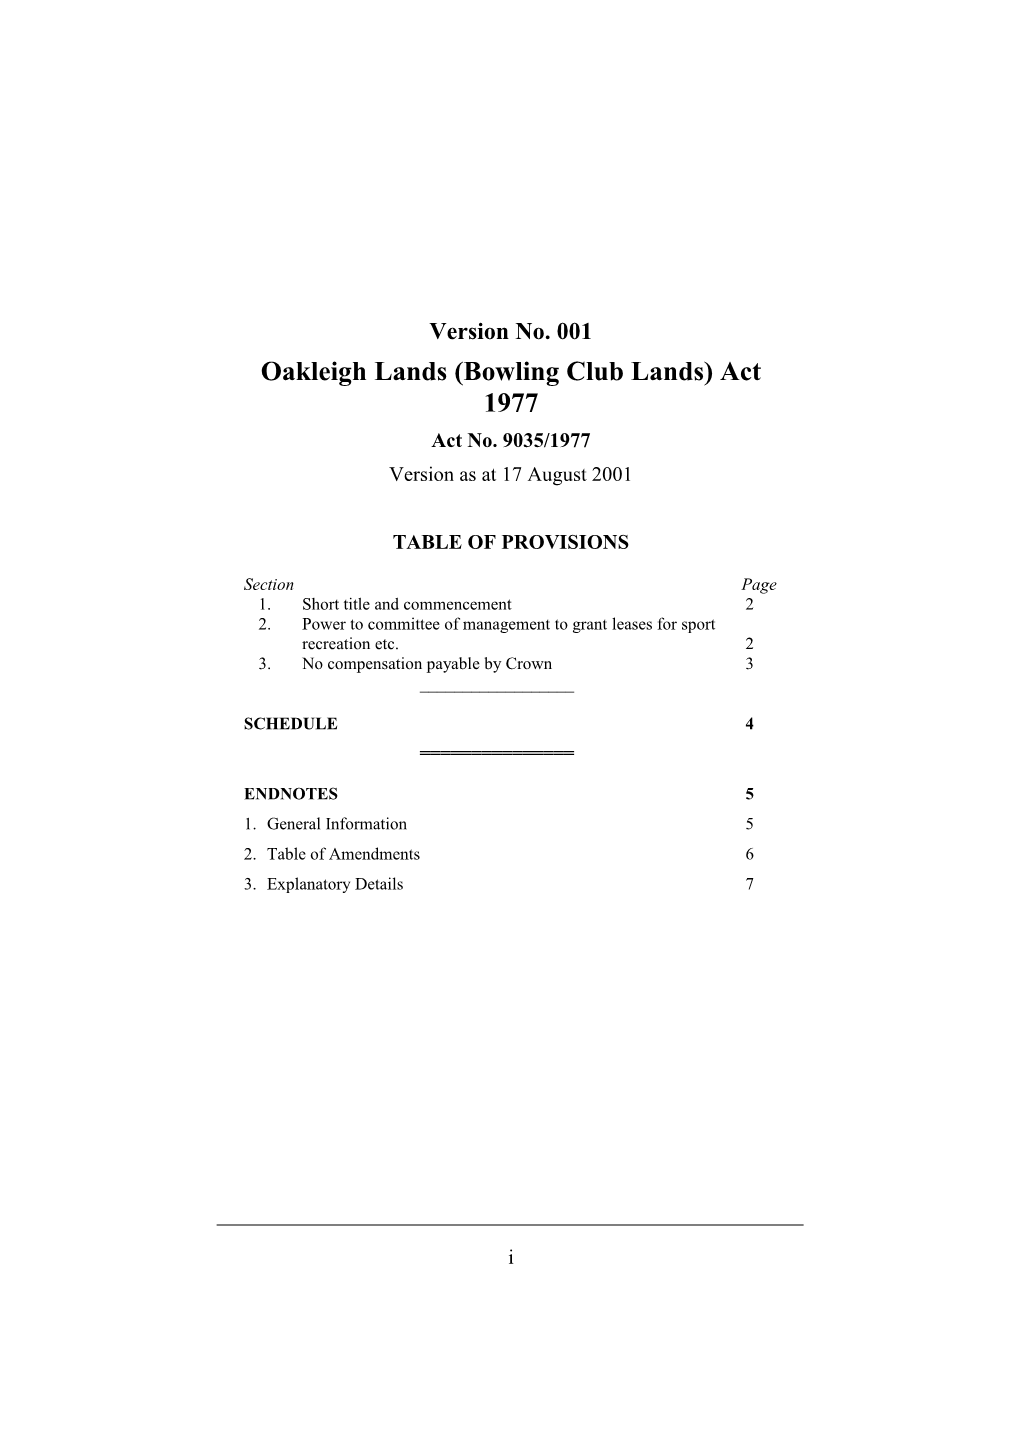 Oakleigh Lands (Bowling Club Lands) Act 1977